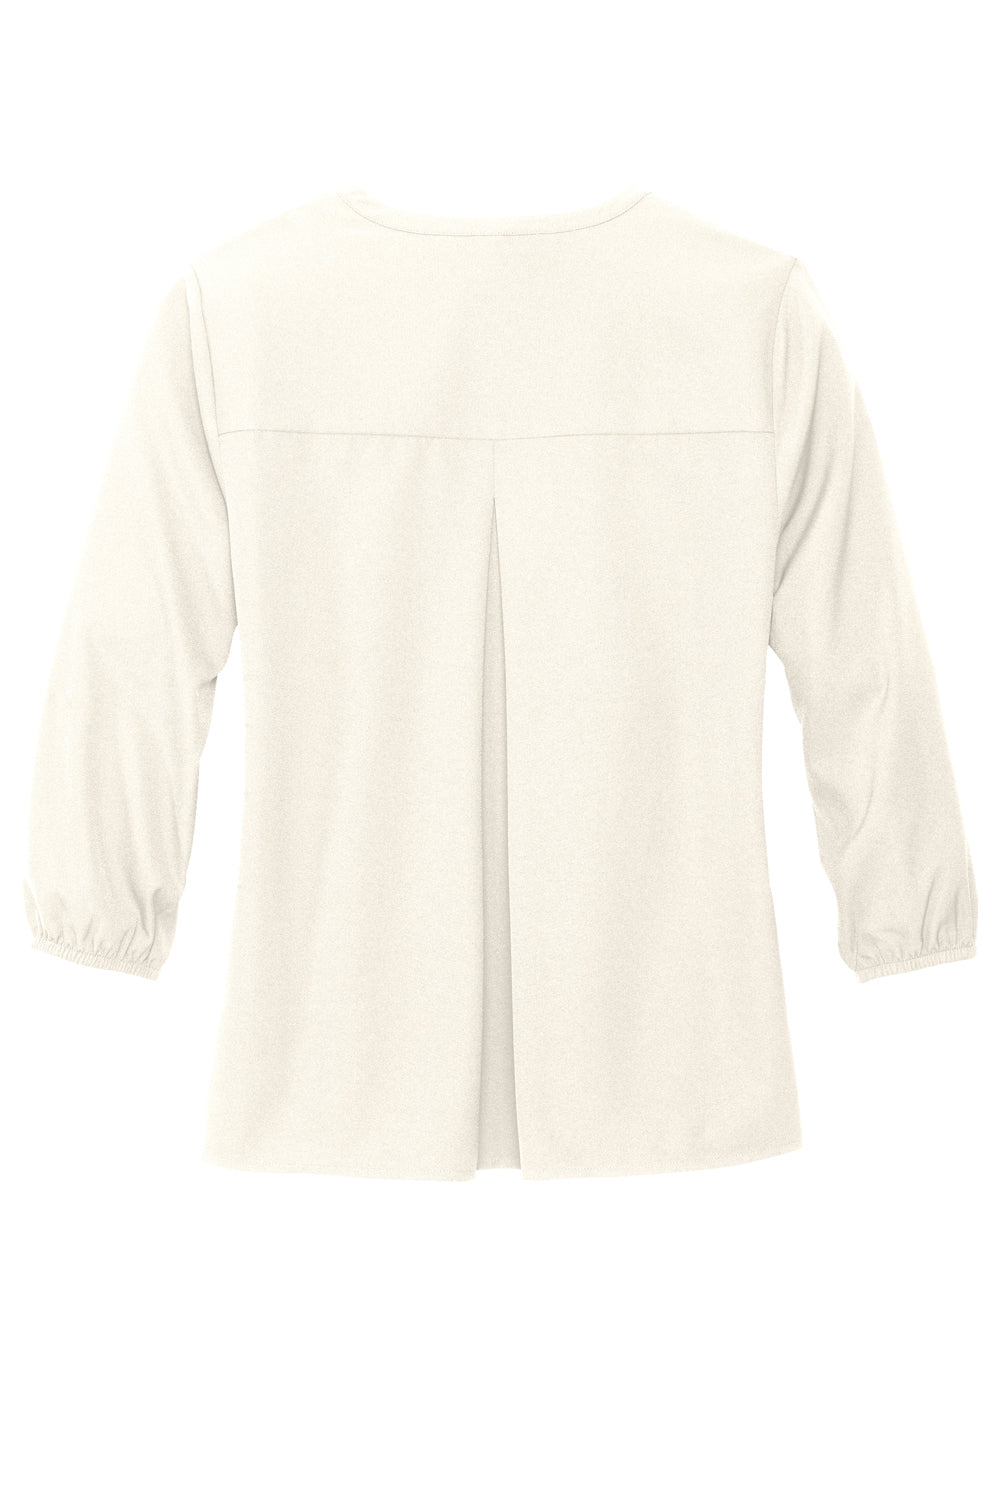 Mercer+Mettle MM2011 Stretch Crepe 3/4 Sleeve Polo Shirt Ivory Chiffon White Flat Back